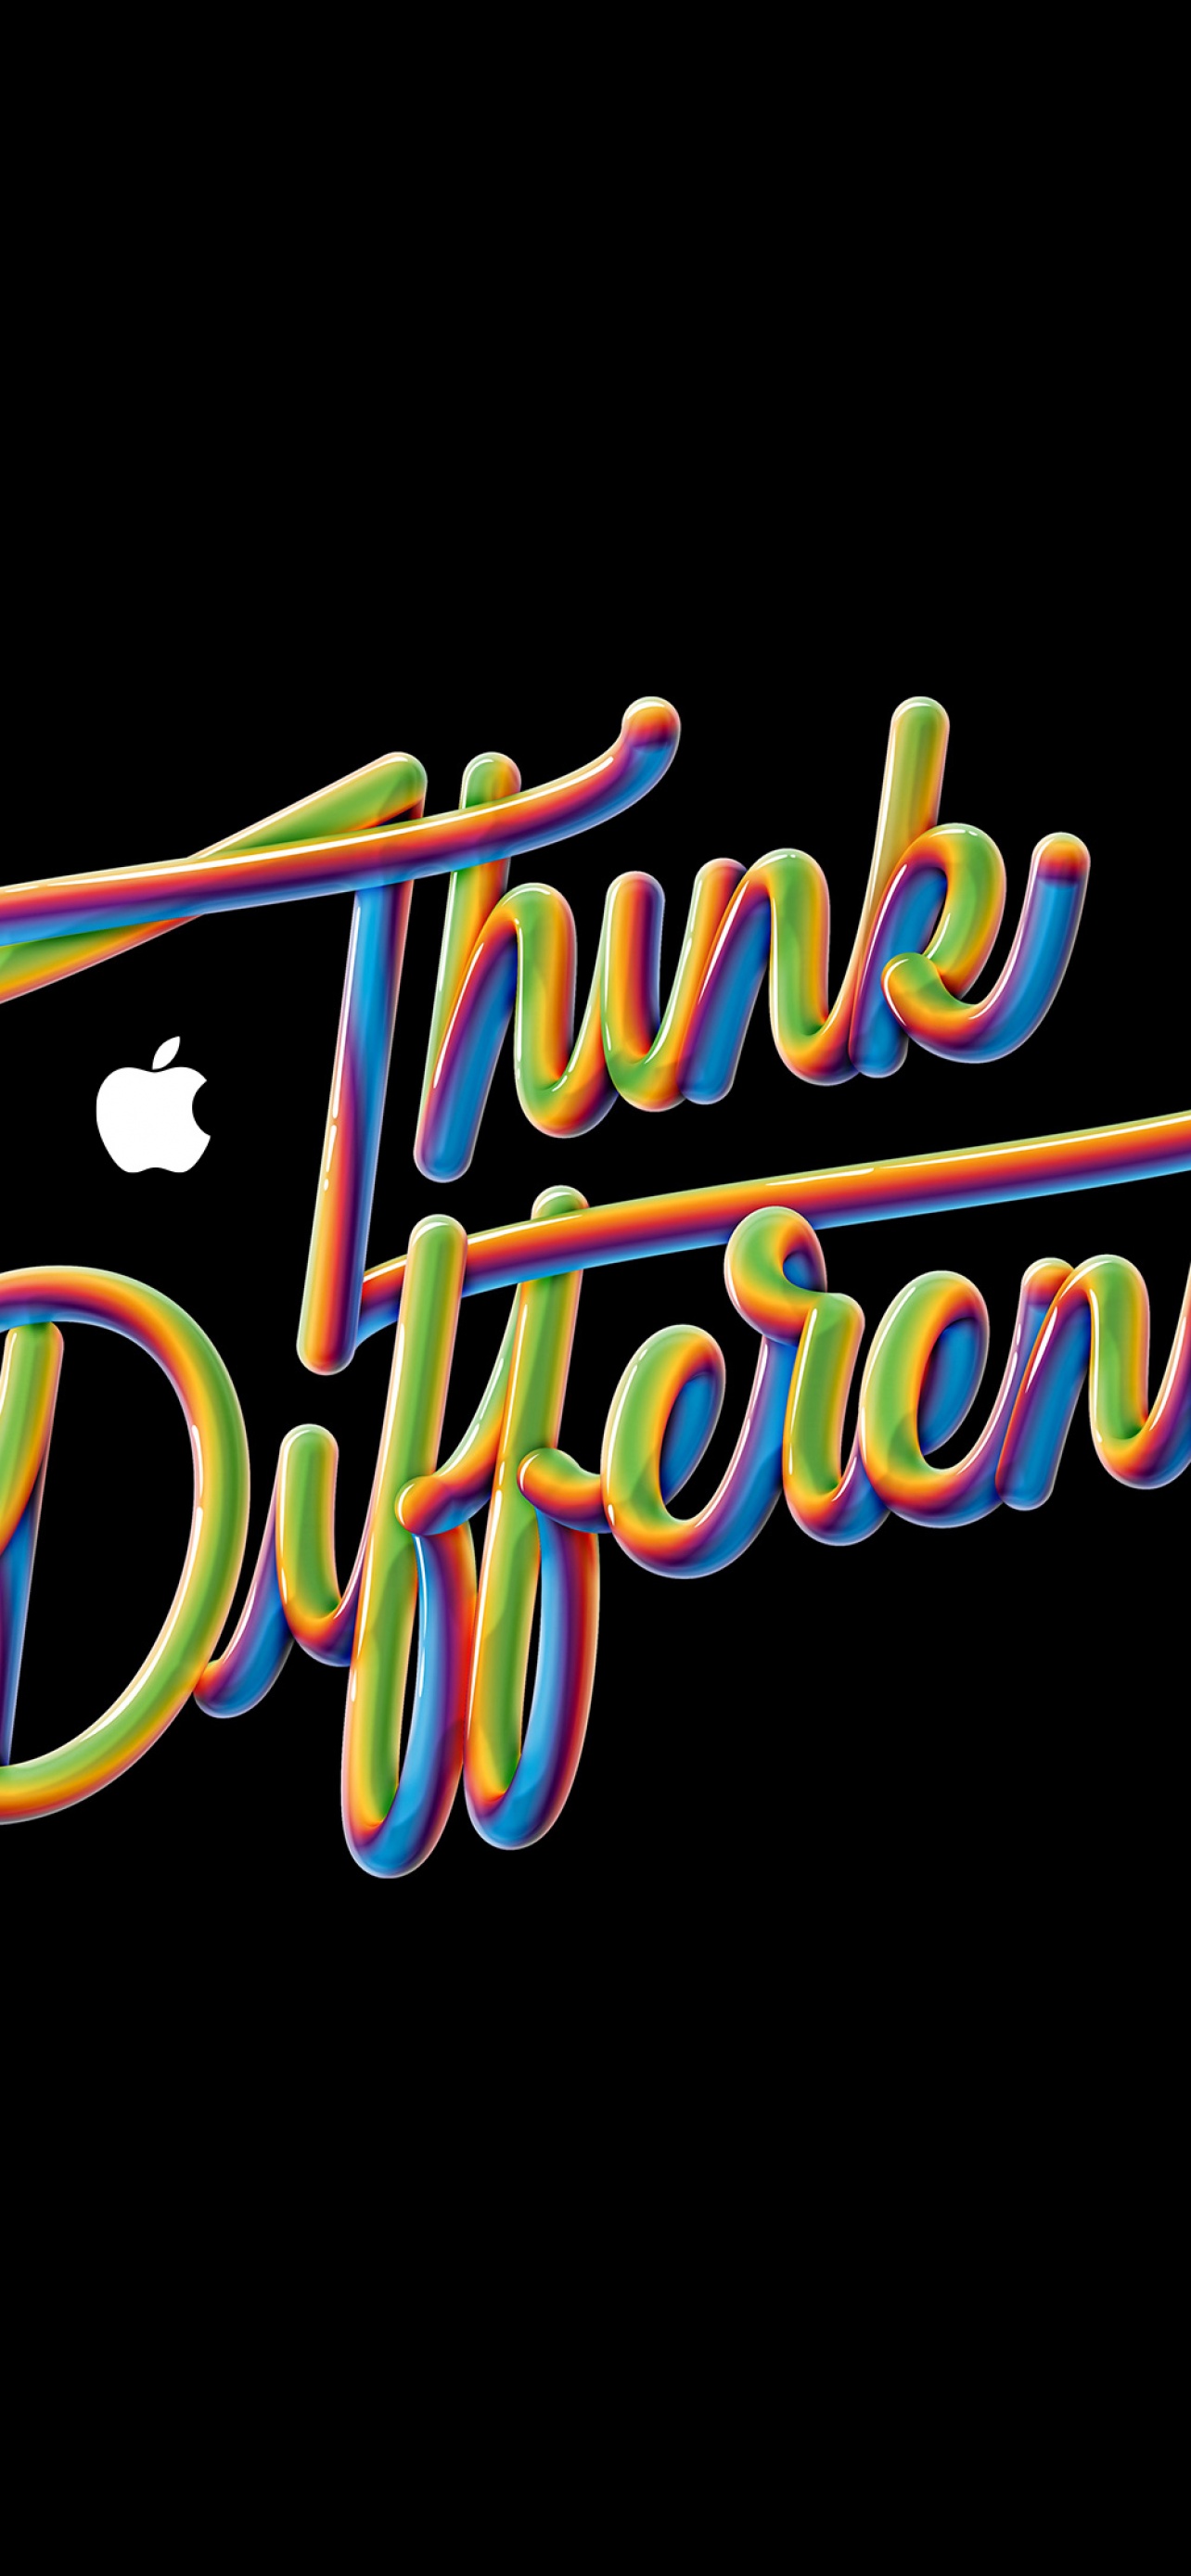 Think different Wallpaper 4K Apple slogan Apple logo 8145